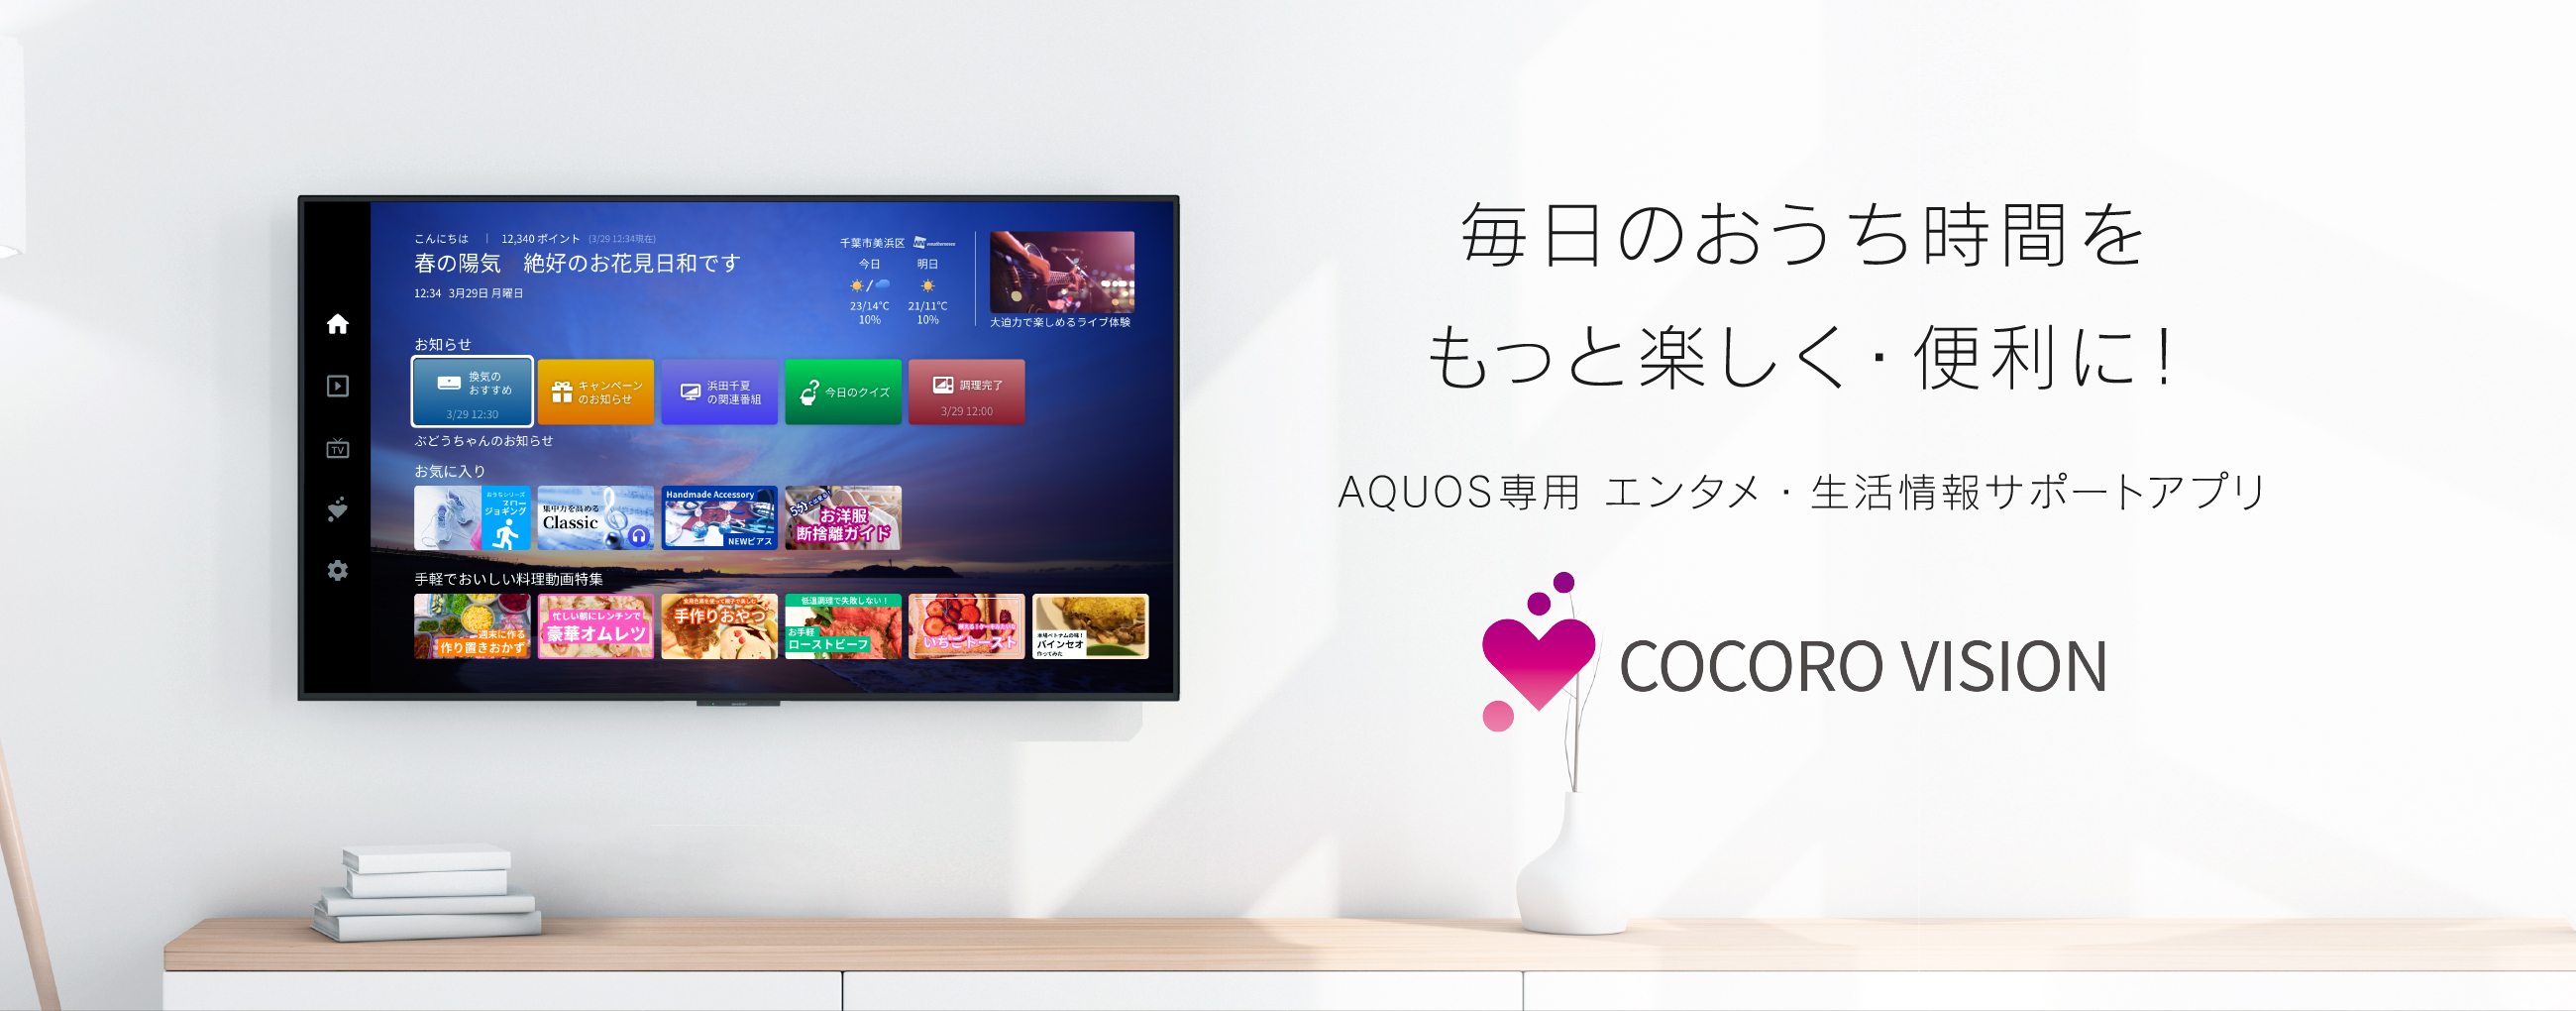 COCORO VISION エンタメ・生活情報サポートアプリ